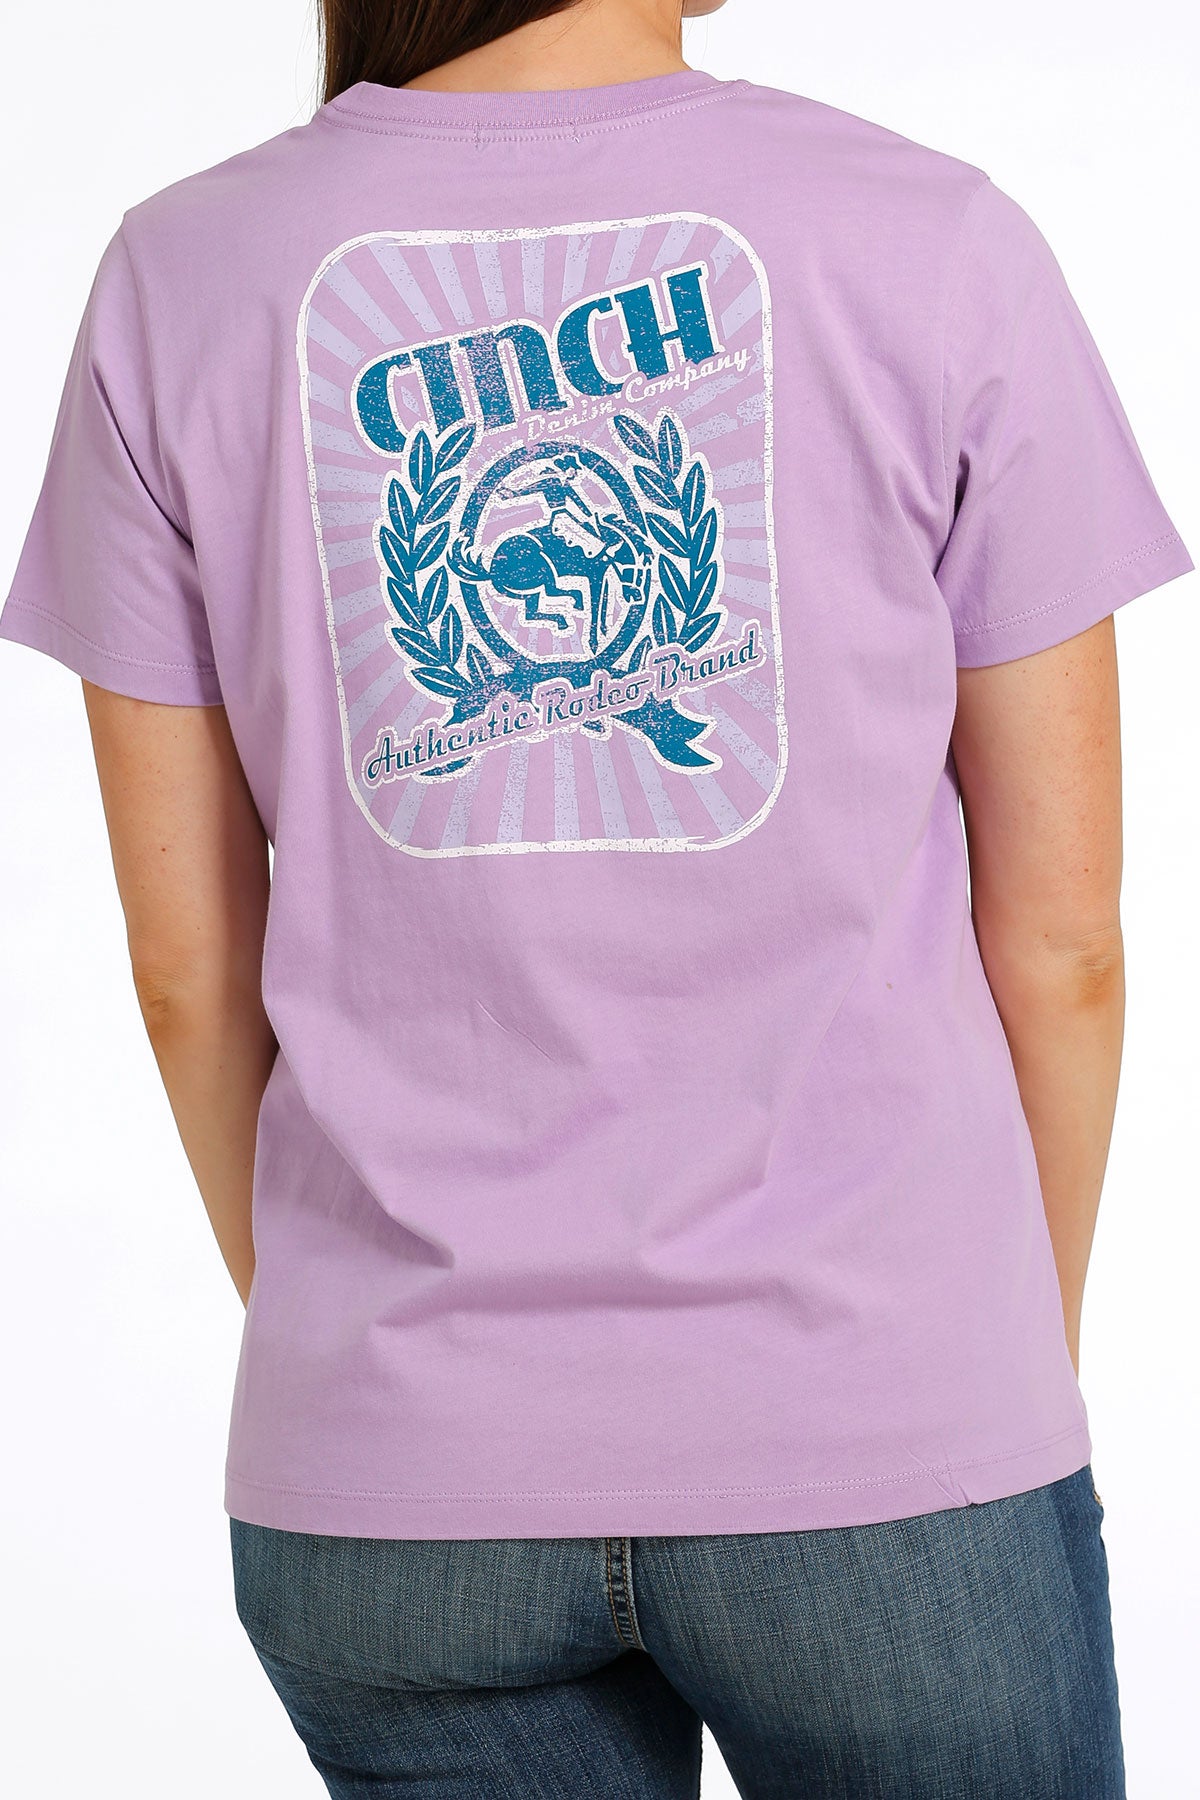 Cinch Women's Authentic Rodeo Brand Tshirt